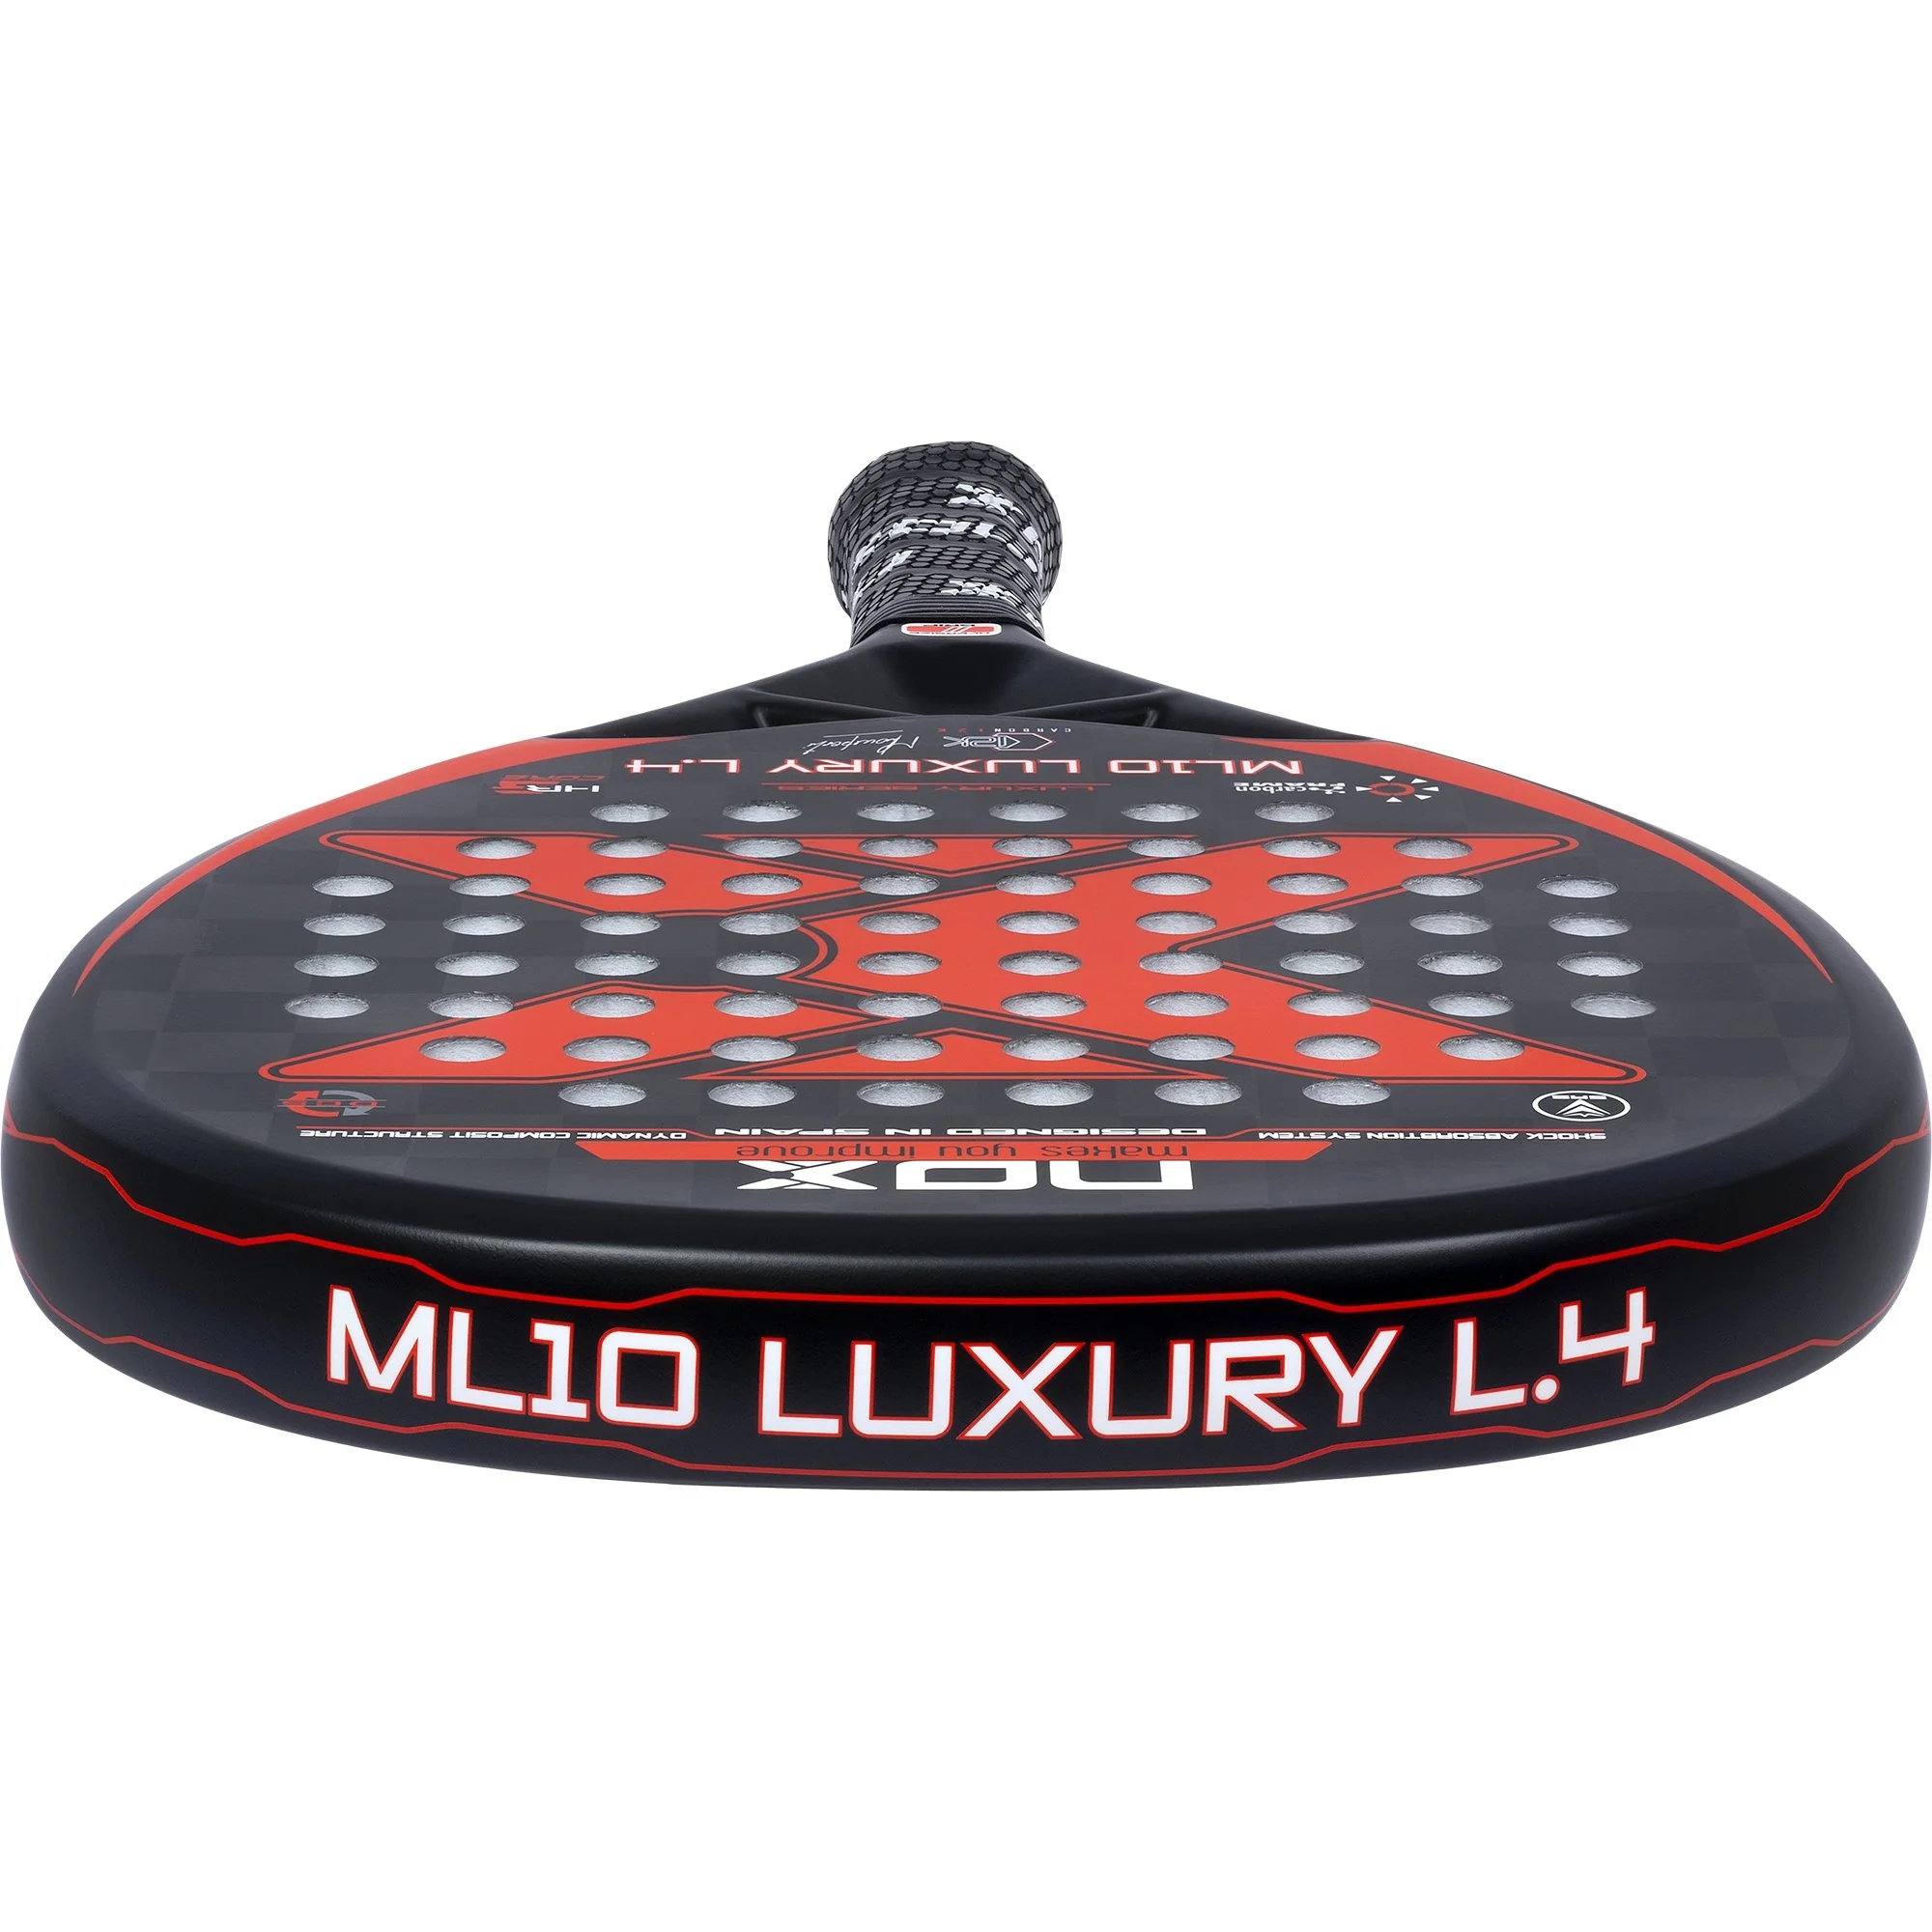 ML10 Luxury L.4